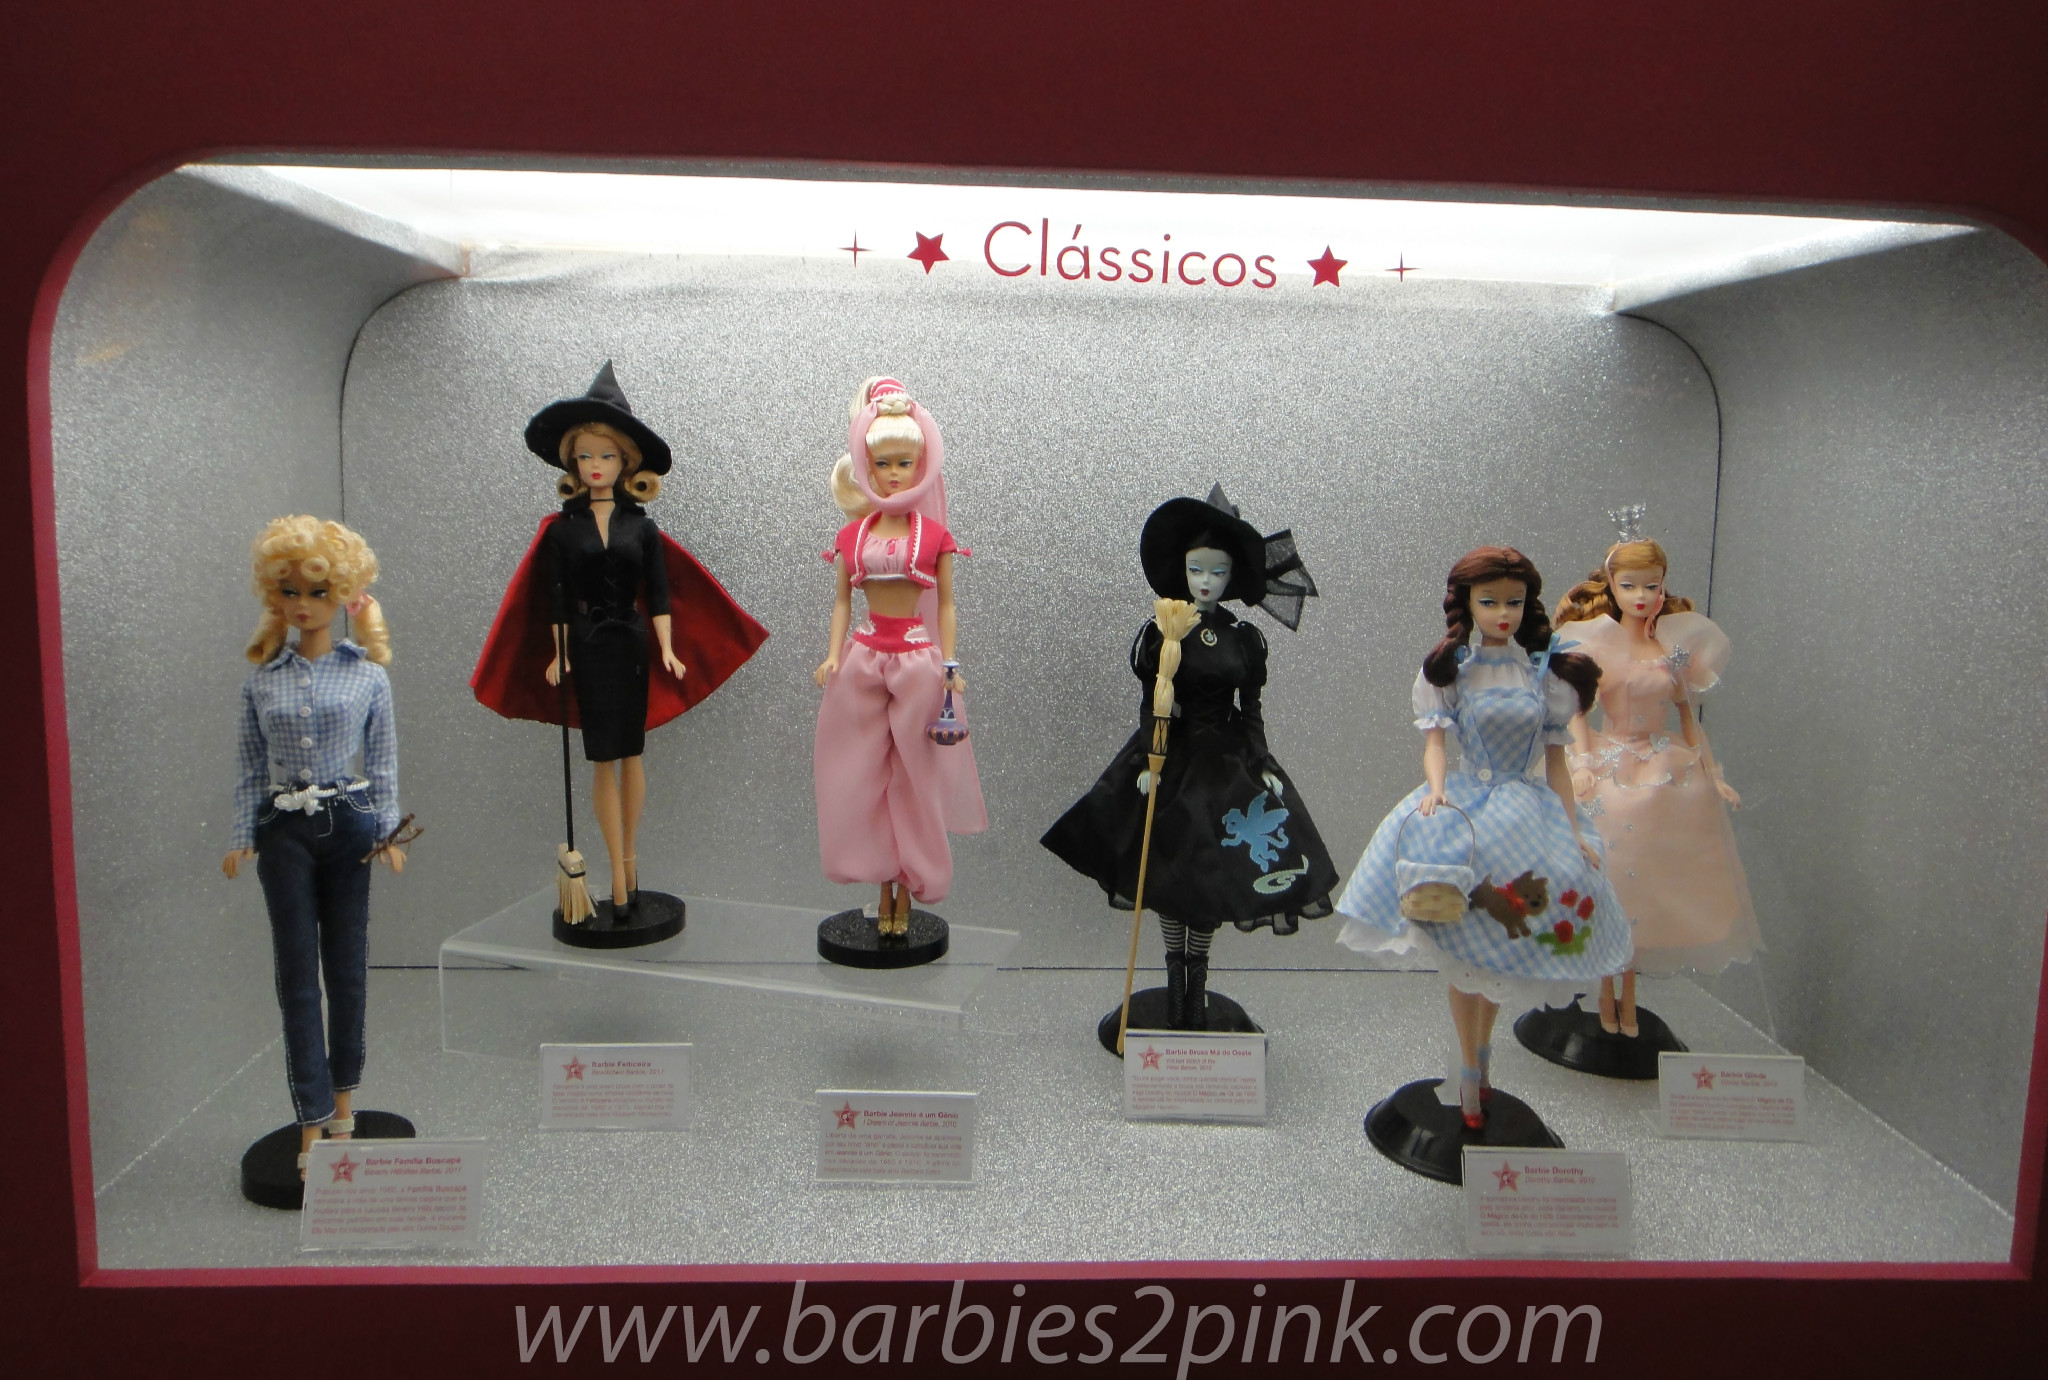 Barbie A minha primeira Barbie latina · MATTEL · El Corte Inglés